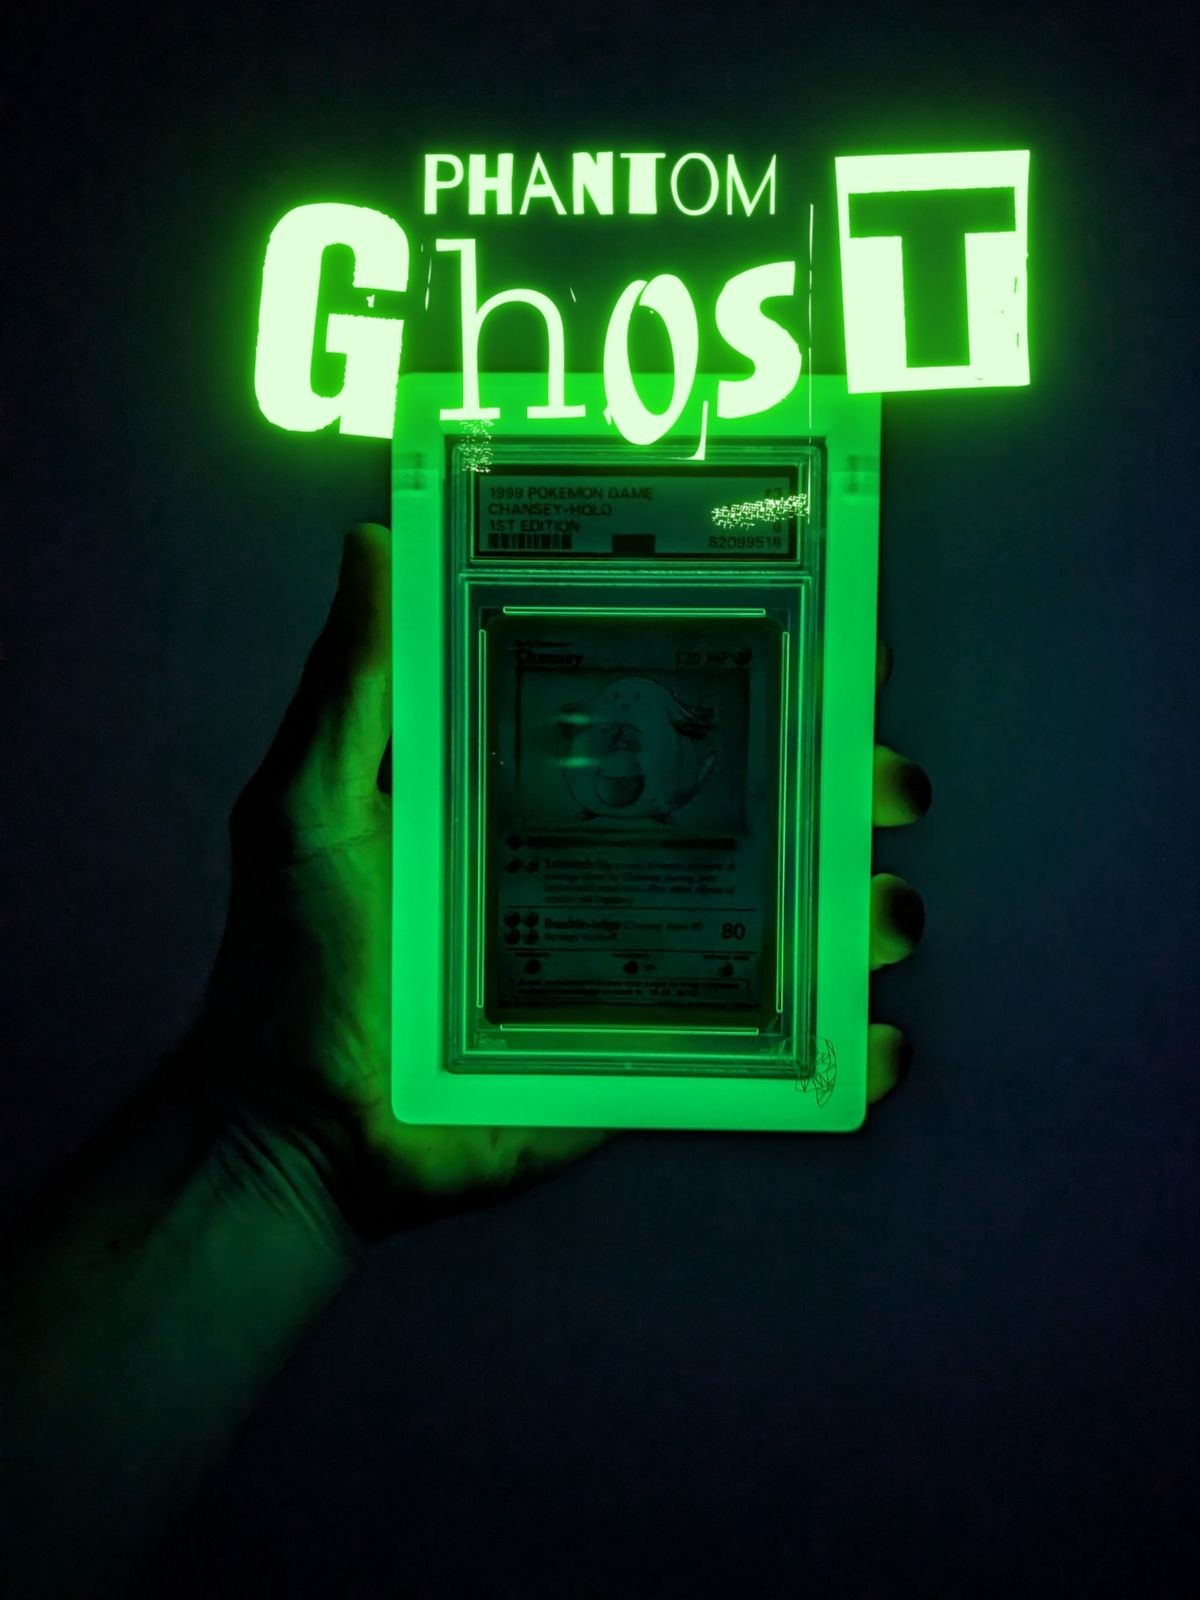 Phantom Display Protective Case Graded Card Glow in the dark mobile